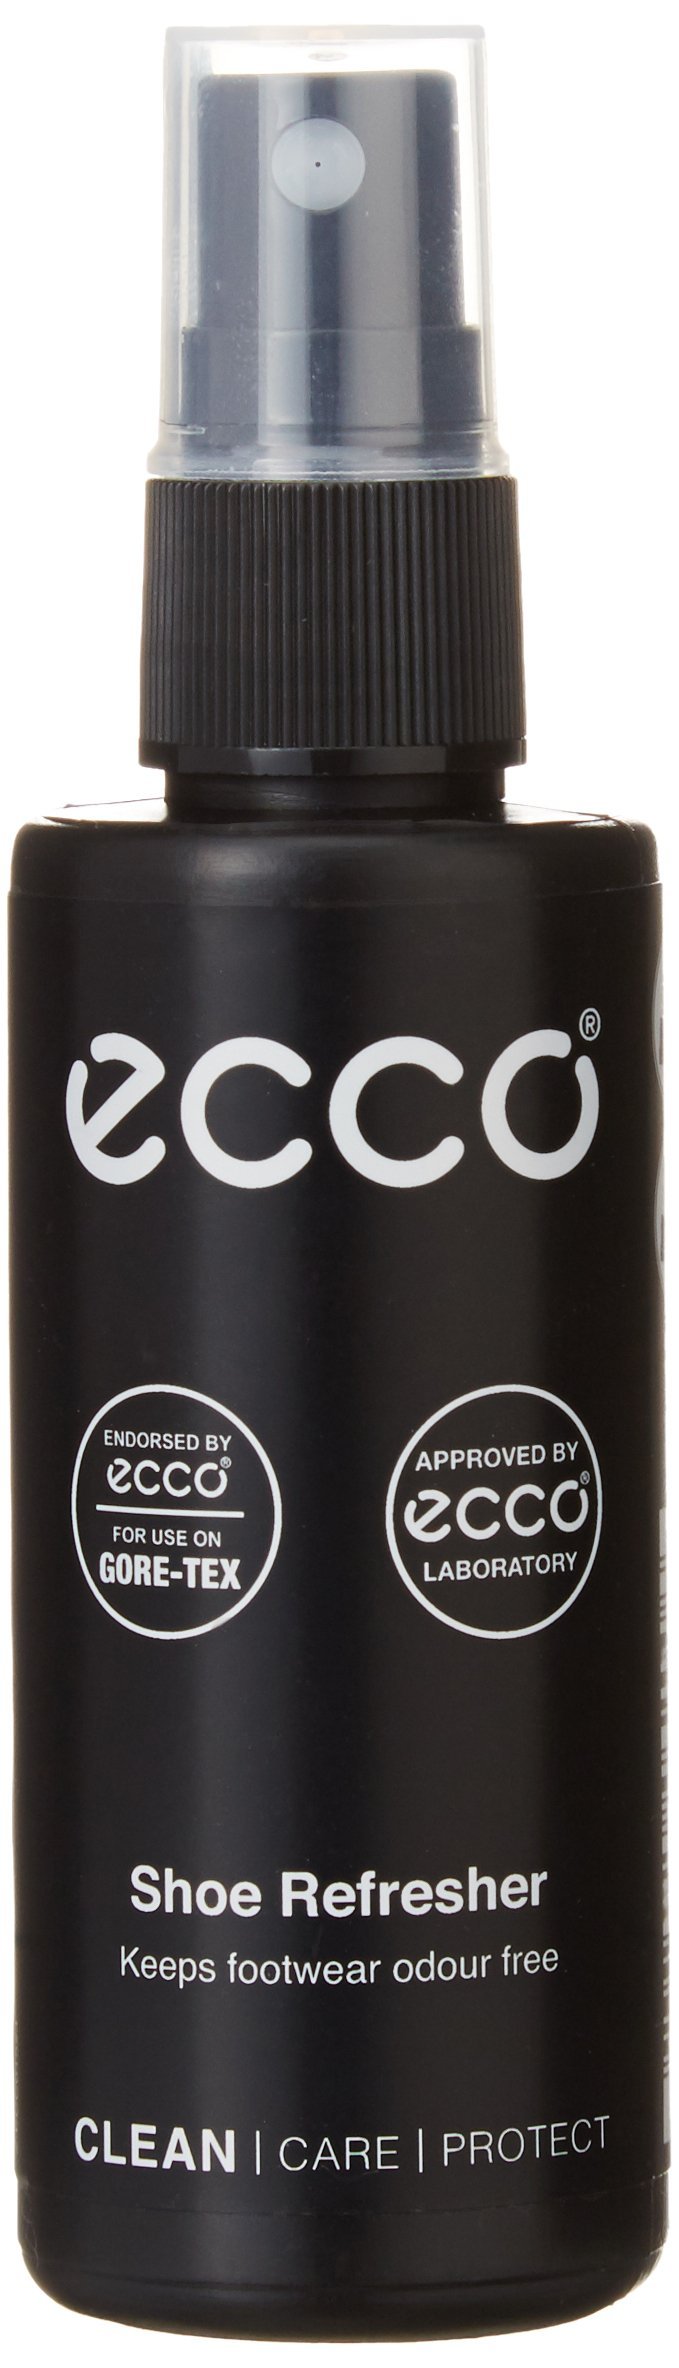 ECCO Men's Care Shoe Refresher Spray